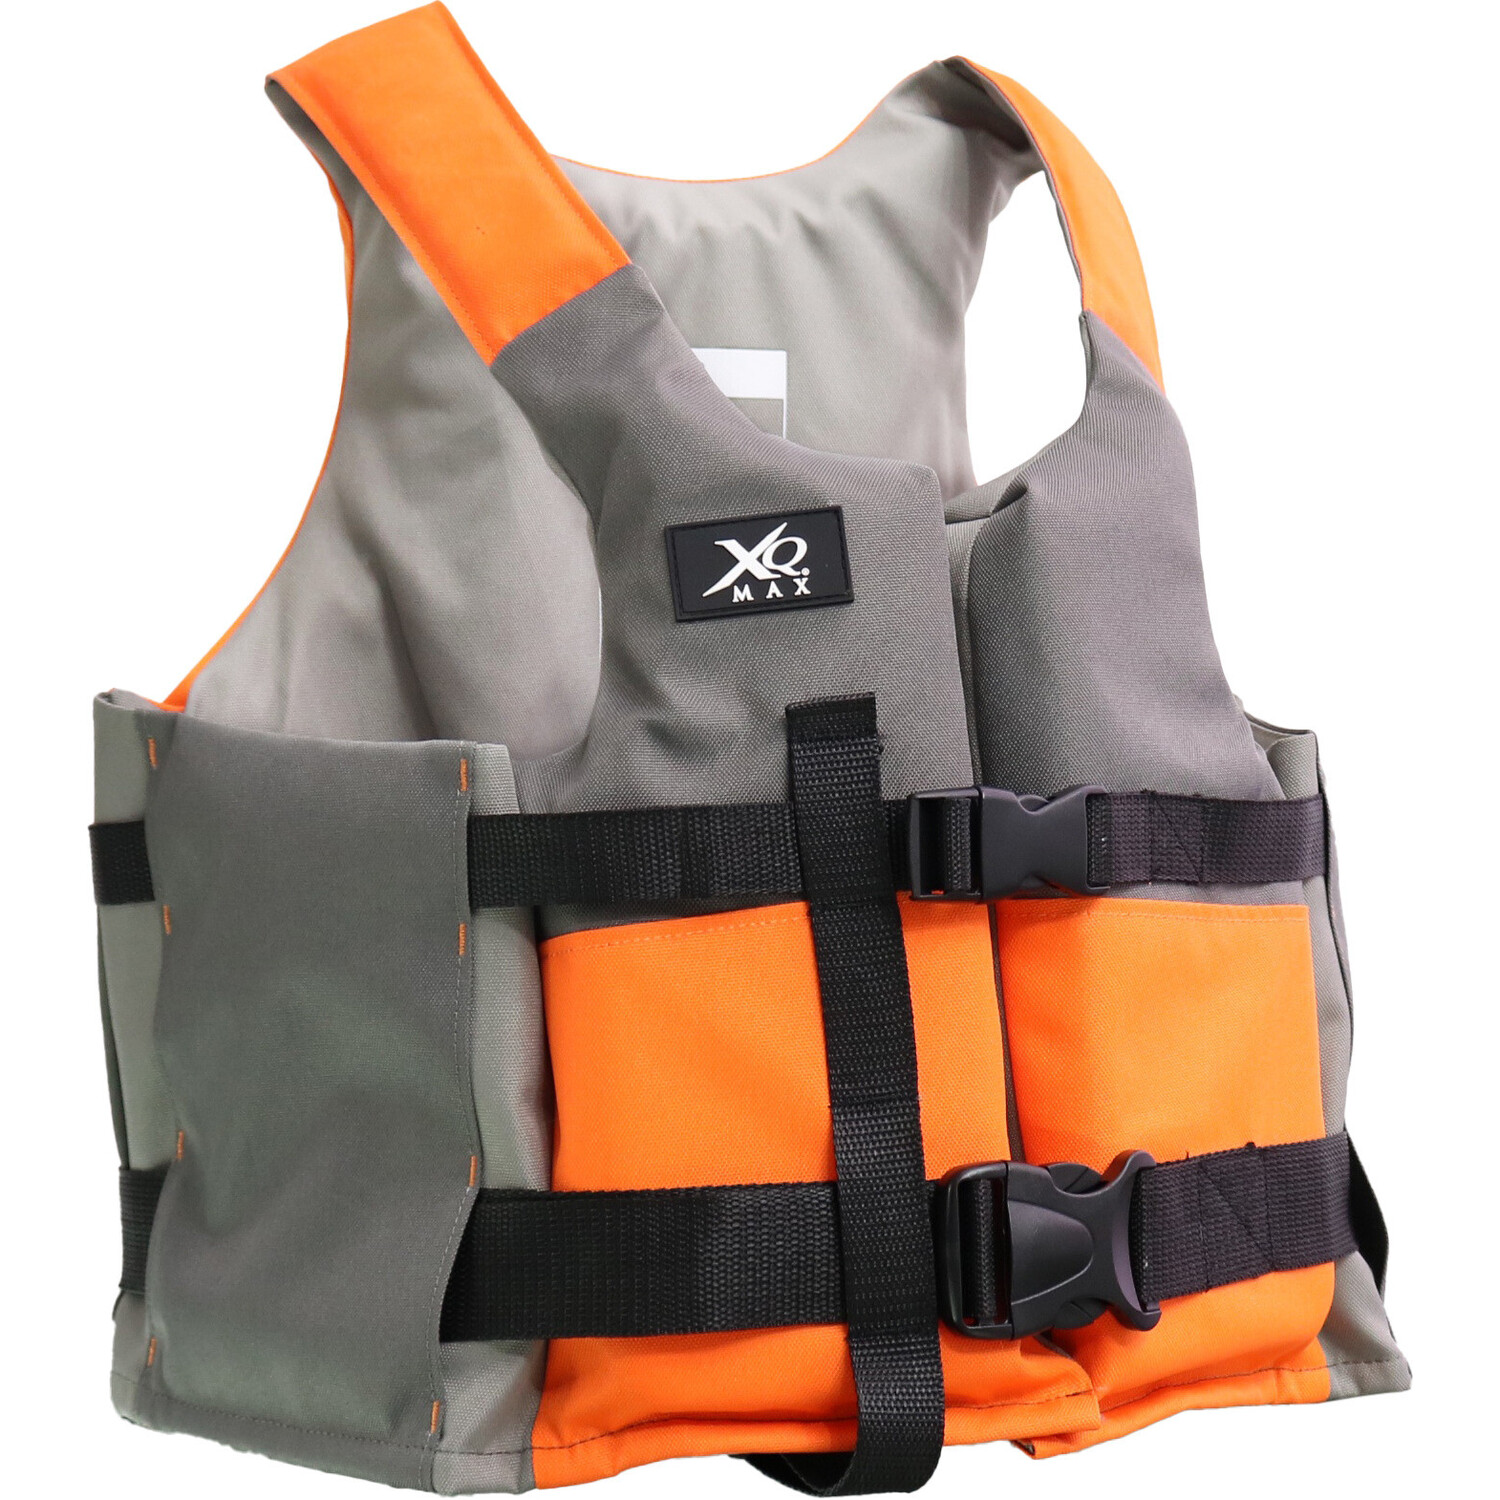 XQMAX Buoyancy Aid - Grey / Small Image